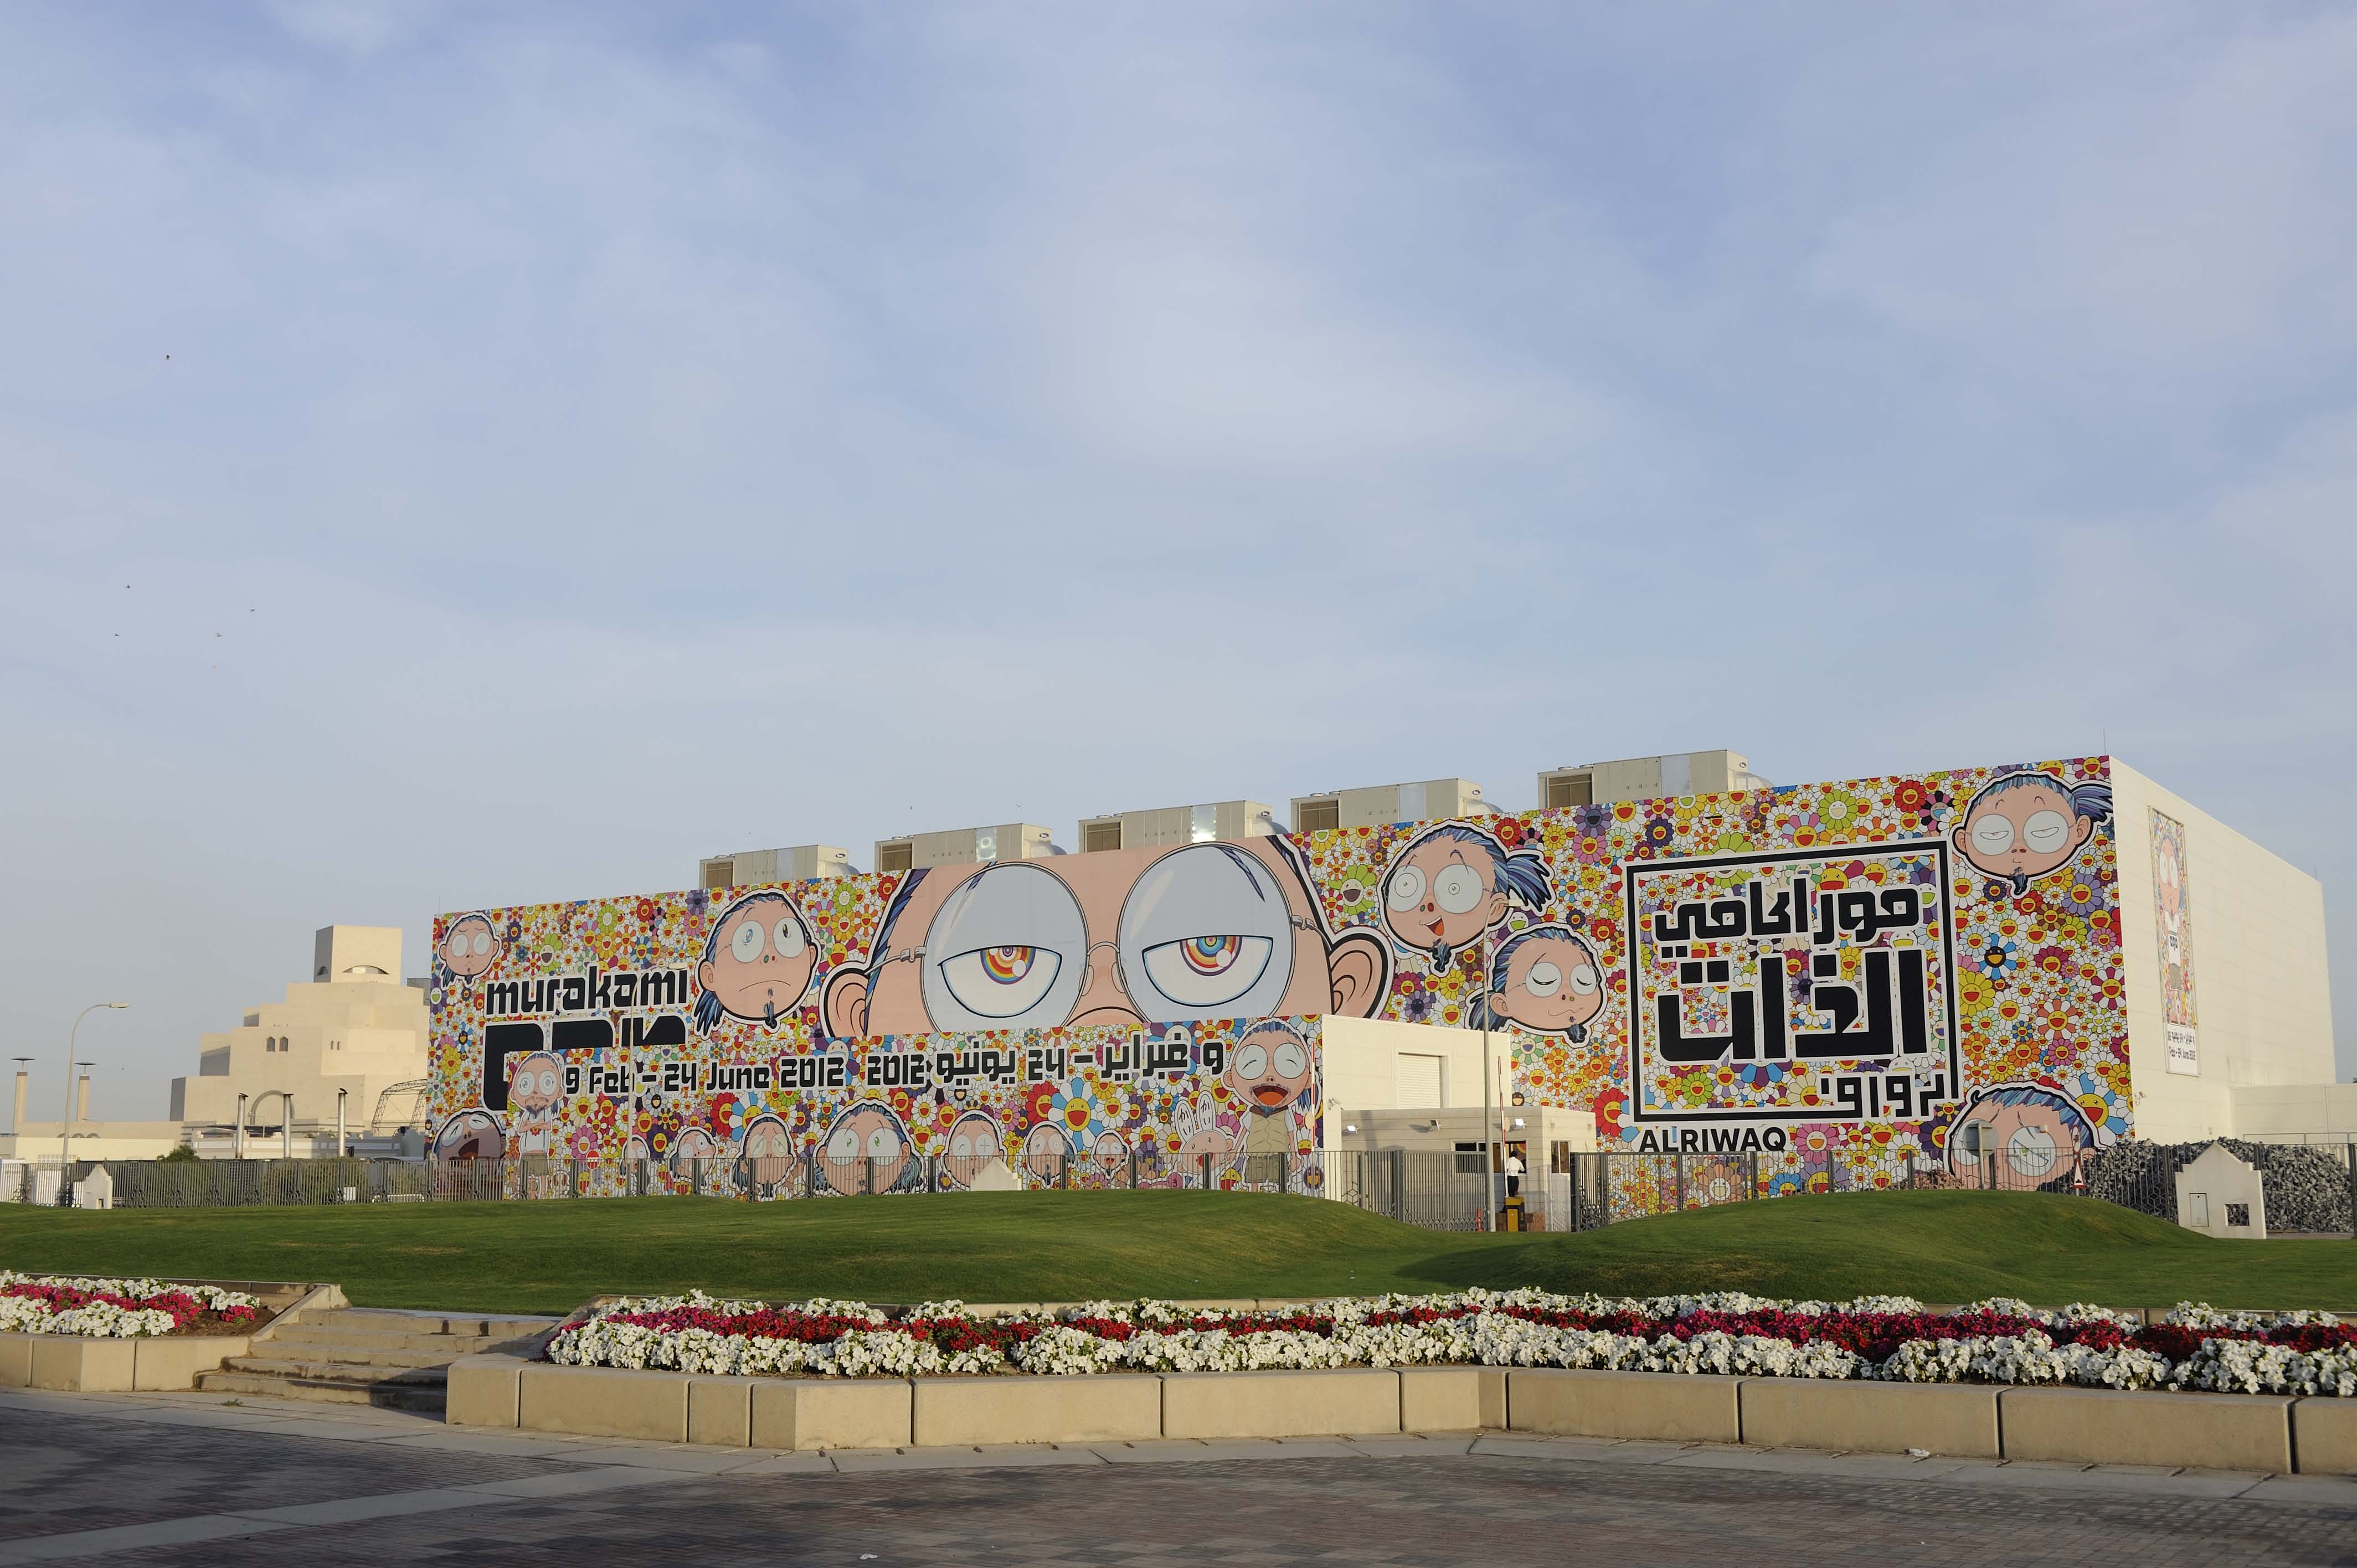 takashi murakami: ego at al riwaq exhibition hall, doha, qatar